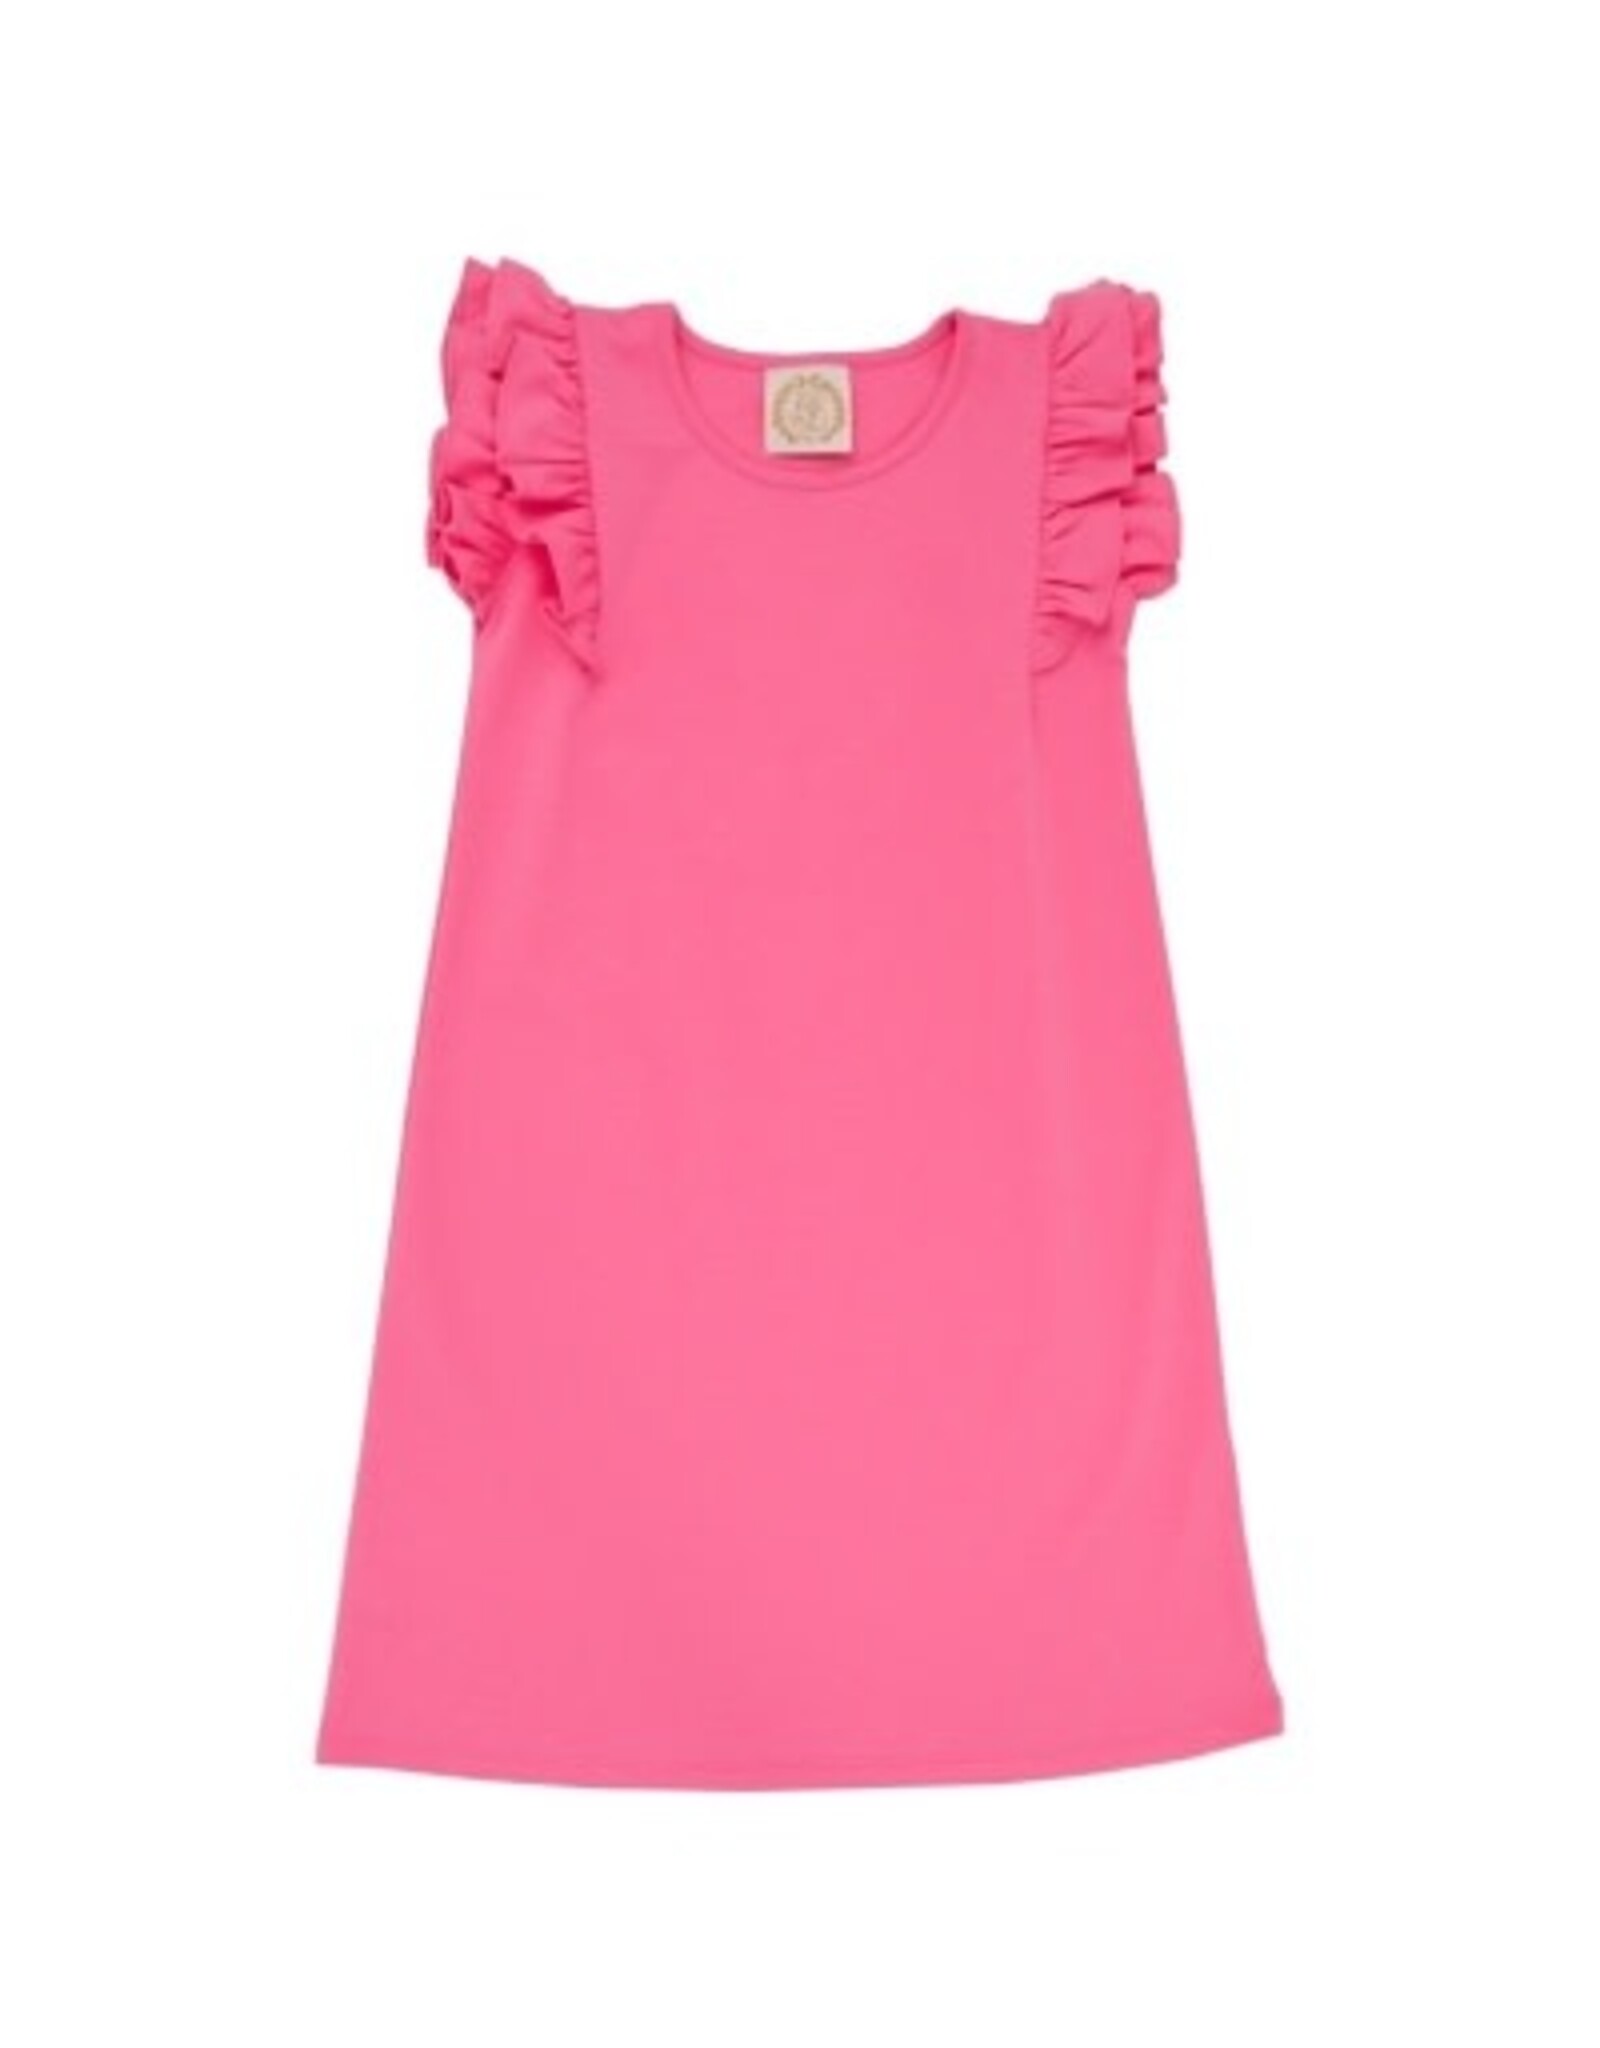 The Beaufort Bonnet Company Ruehling Ruffle Dress, Winter Park Pink